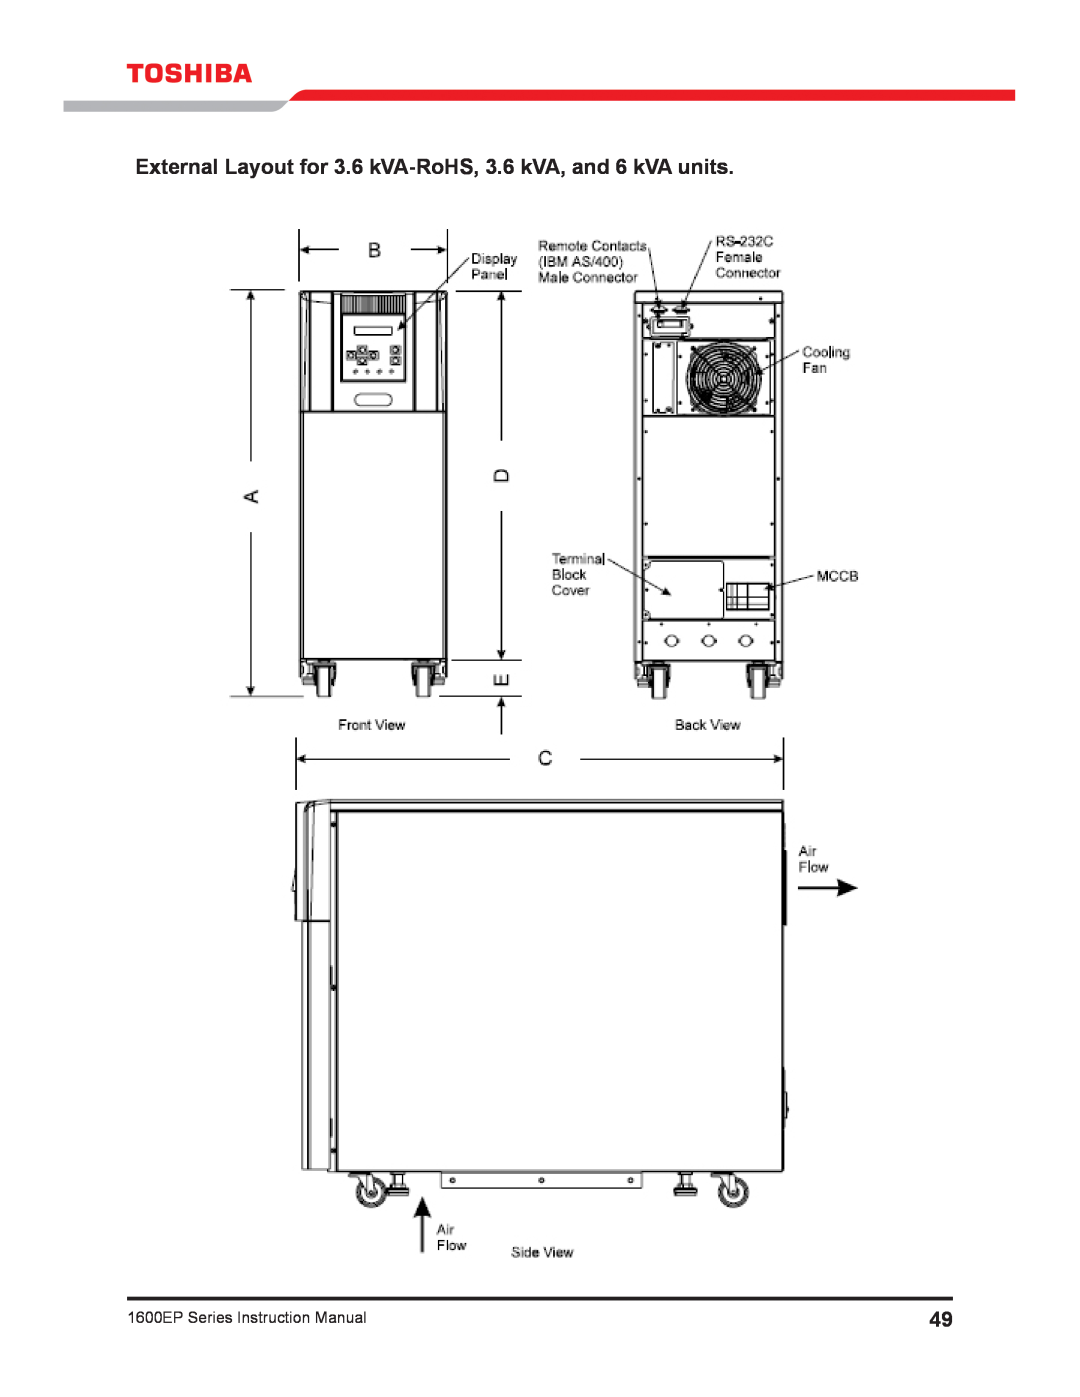 Toshiba 1600EP Series manual External Layout for 3.6 kVA-RoHS, 3.6 kVA, and 6 kVA units 